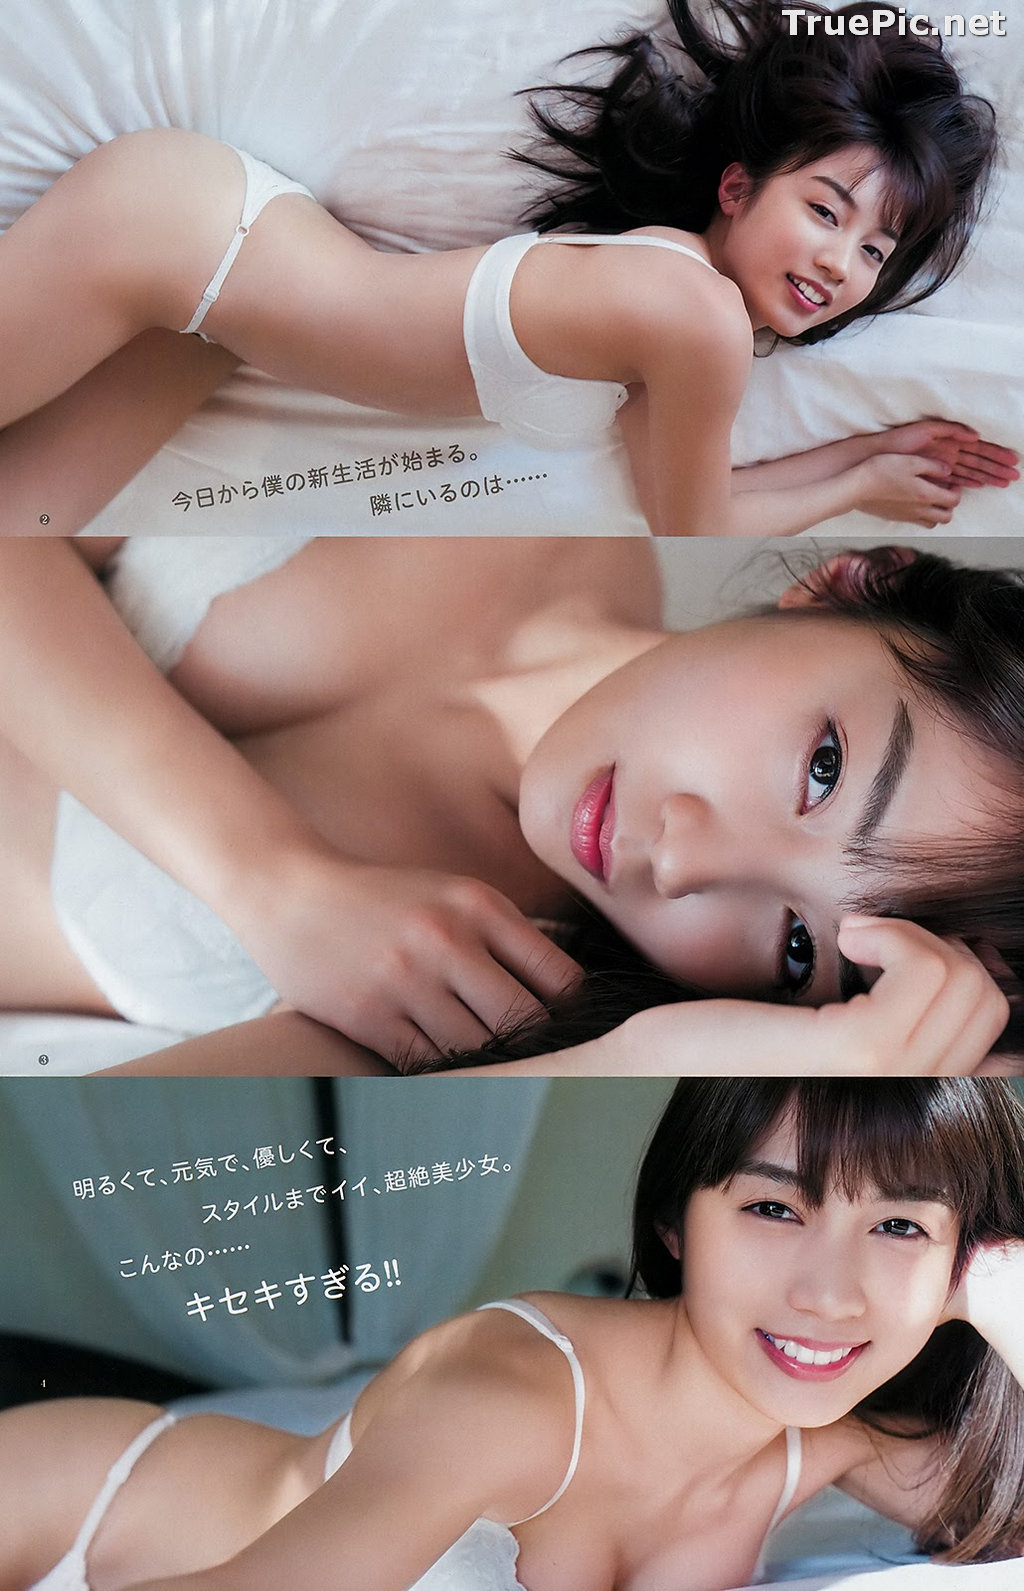 Image Japanese Actress and Model – Hikari Kuroki (黒木ひかり) – Sexy Picture Collection 2021 - TruePic.net - Picture-35